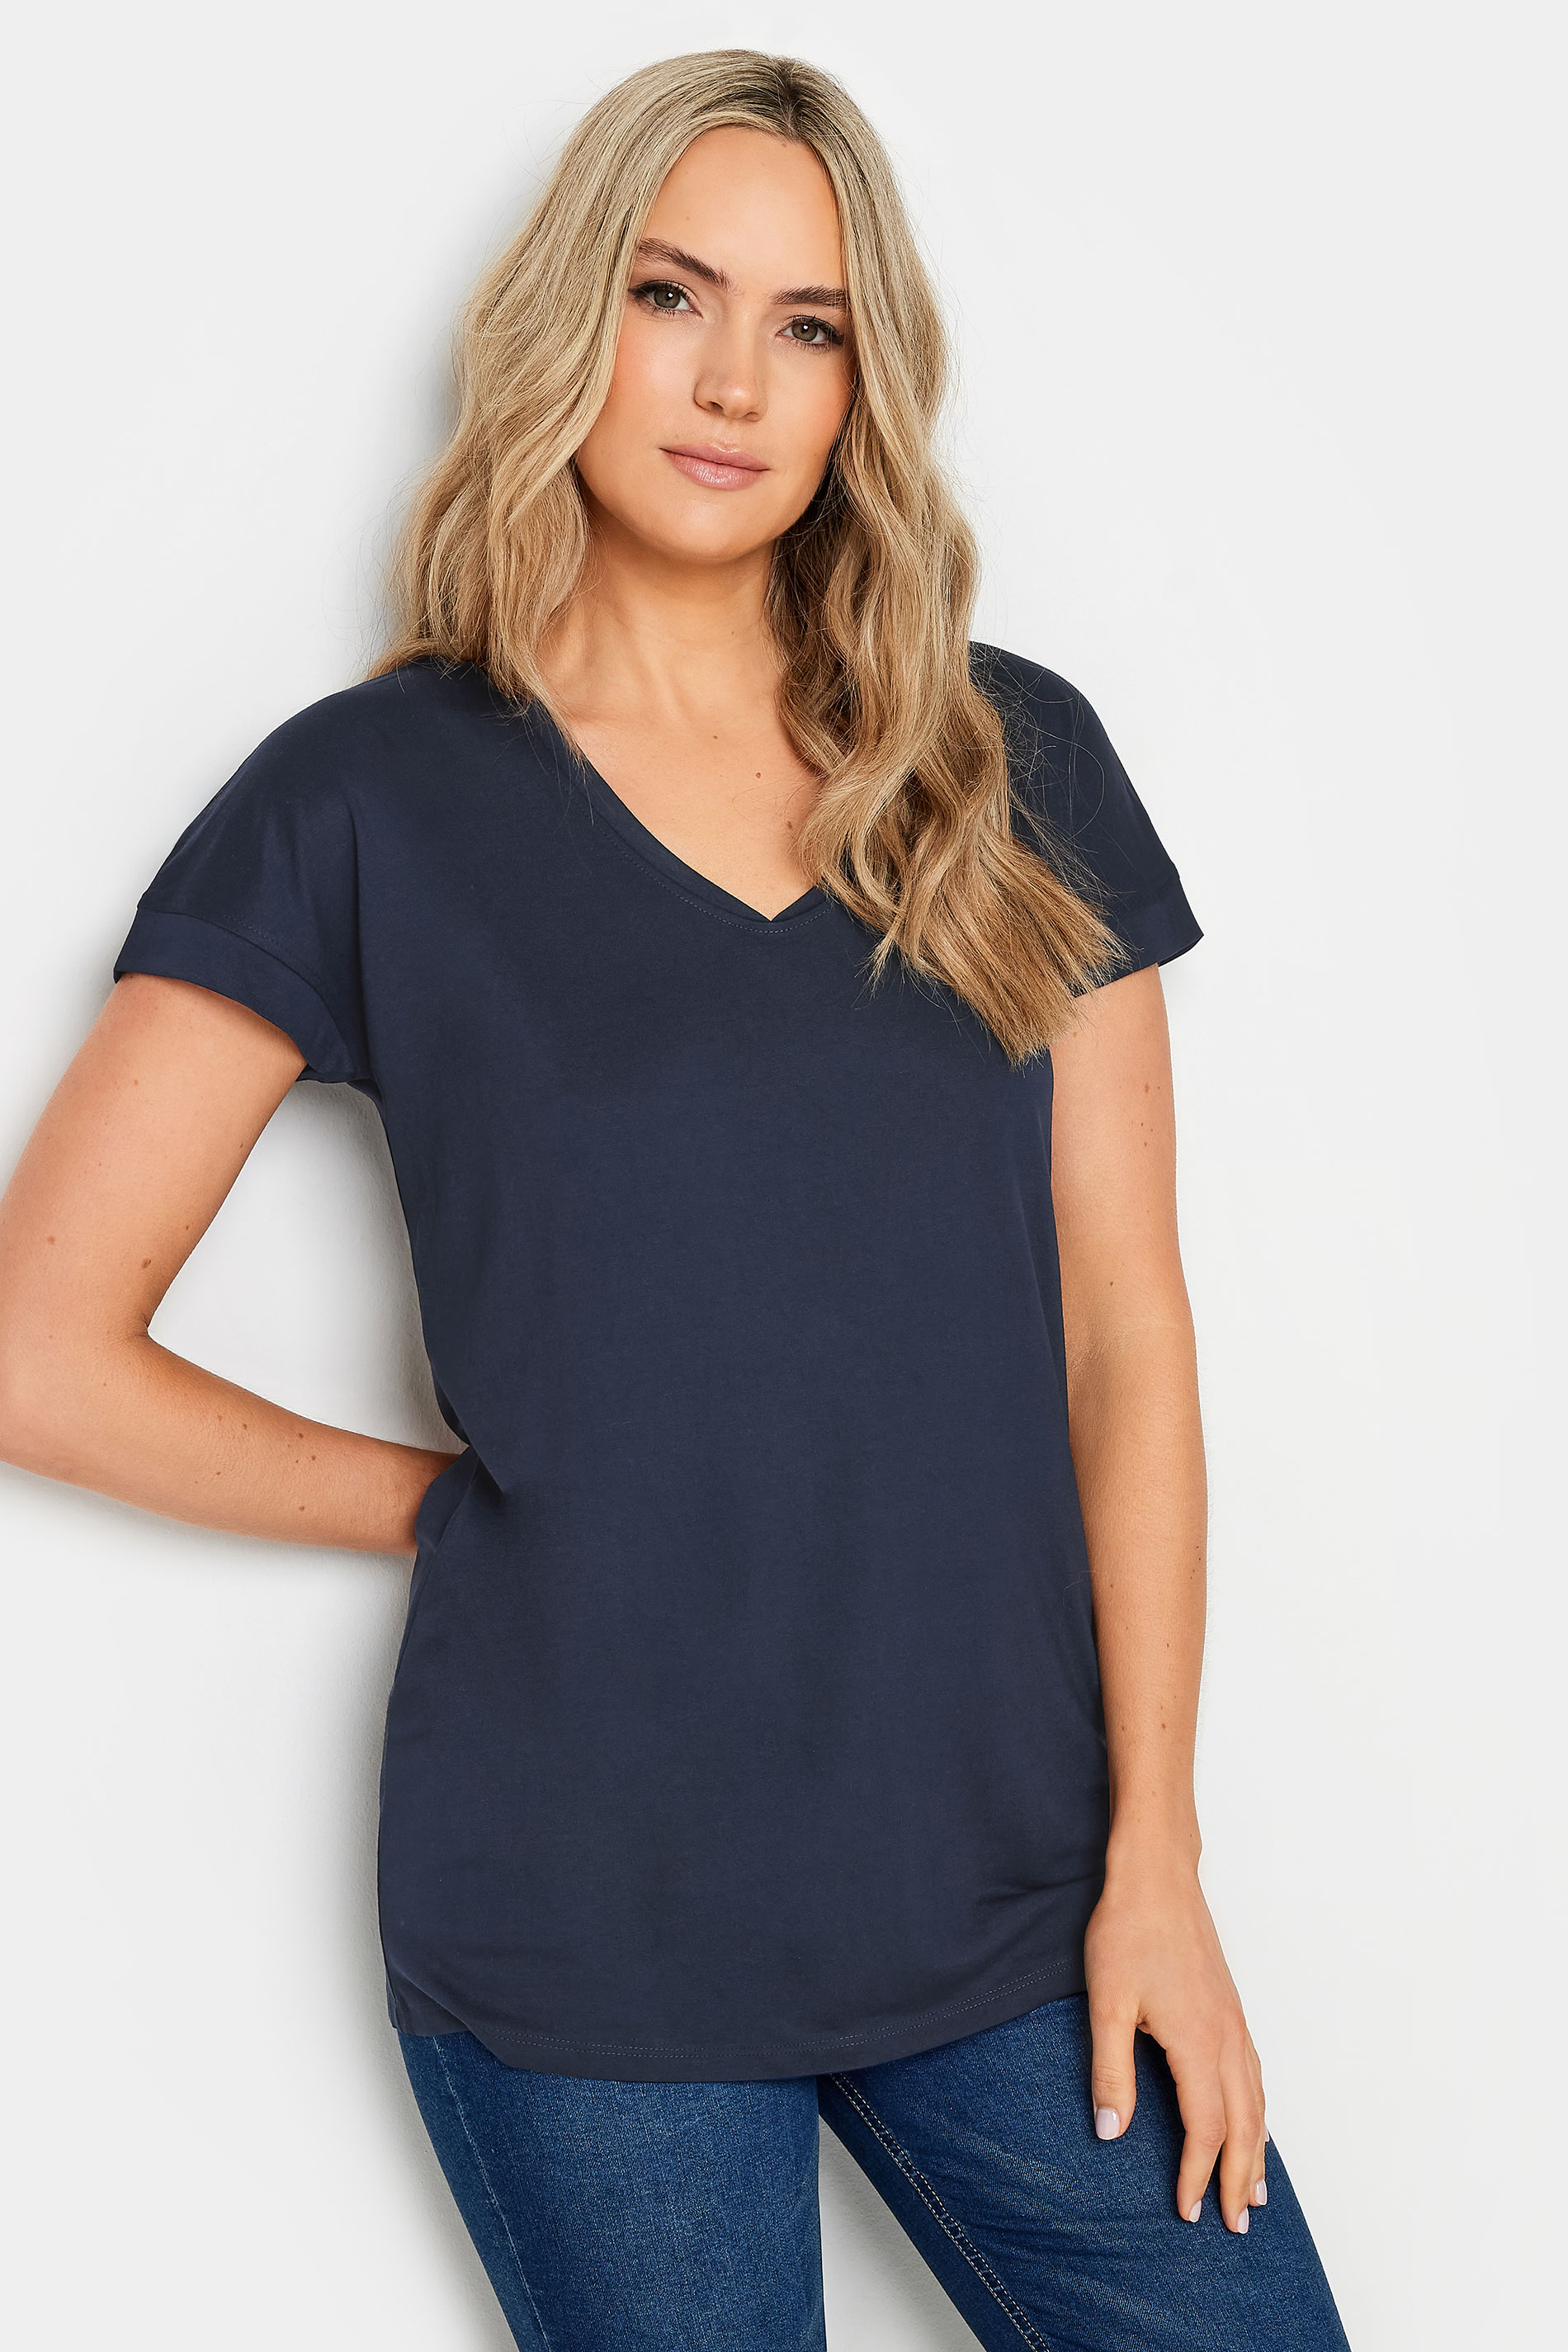 LTS 2 PACK Tall Women's Navy Blue & White Short Sleeve T-Shirts | Long Tall Sally 2